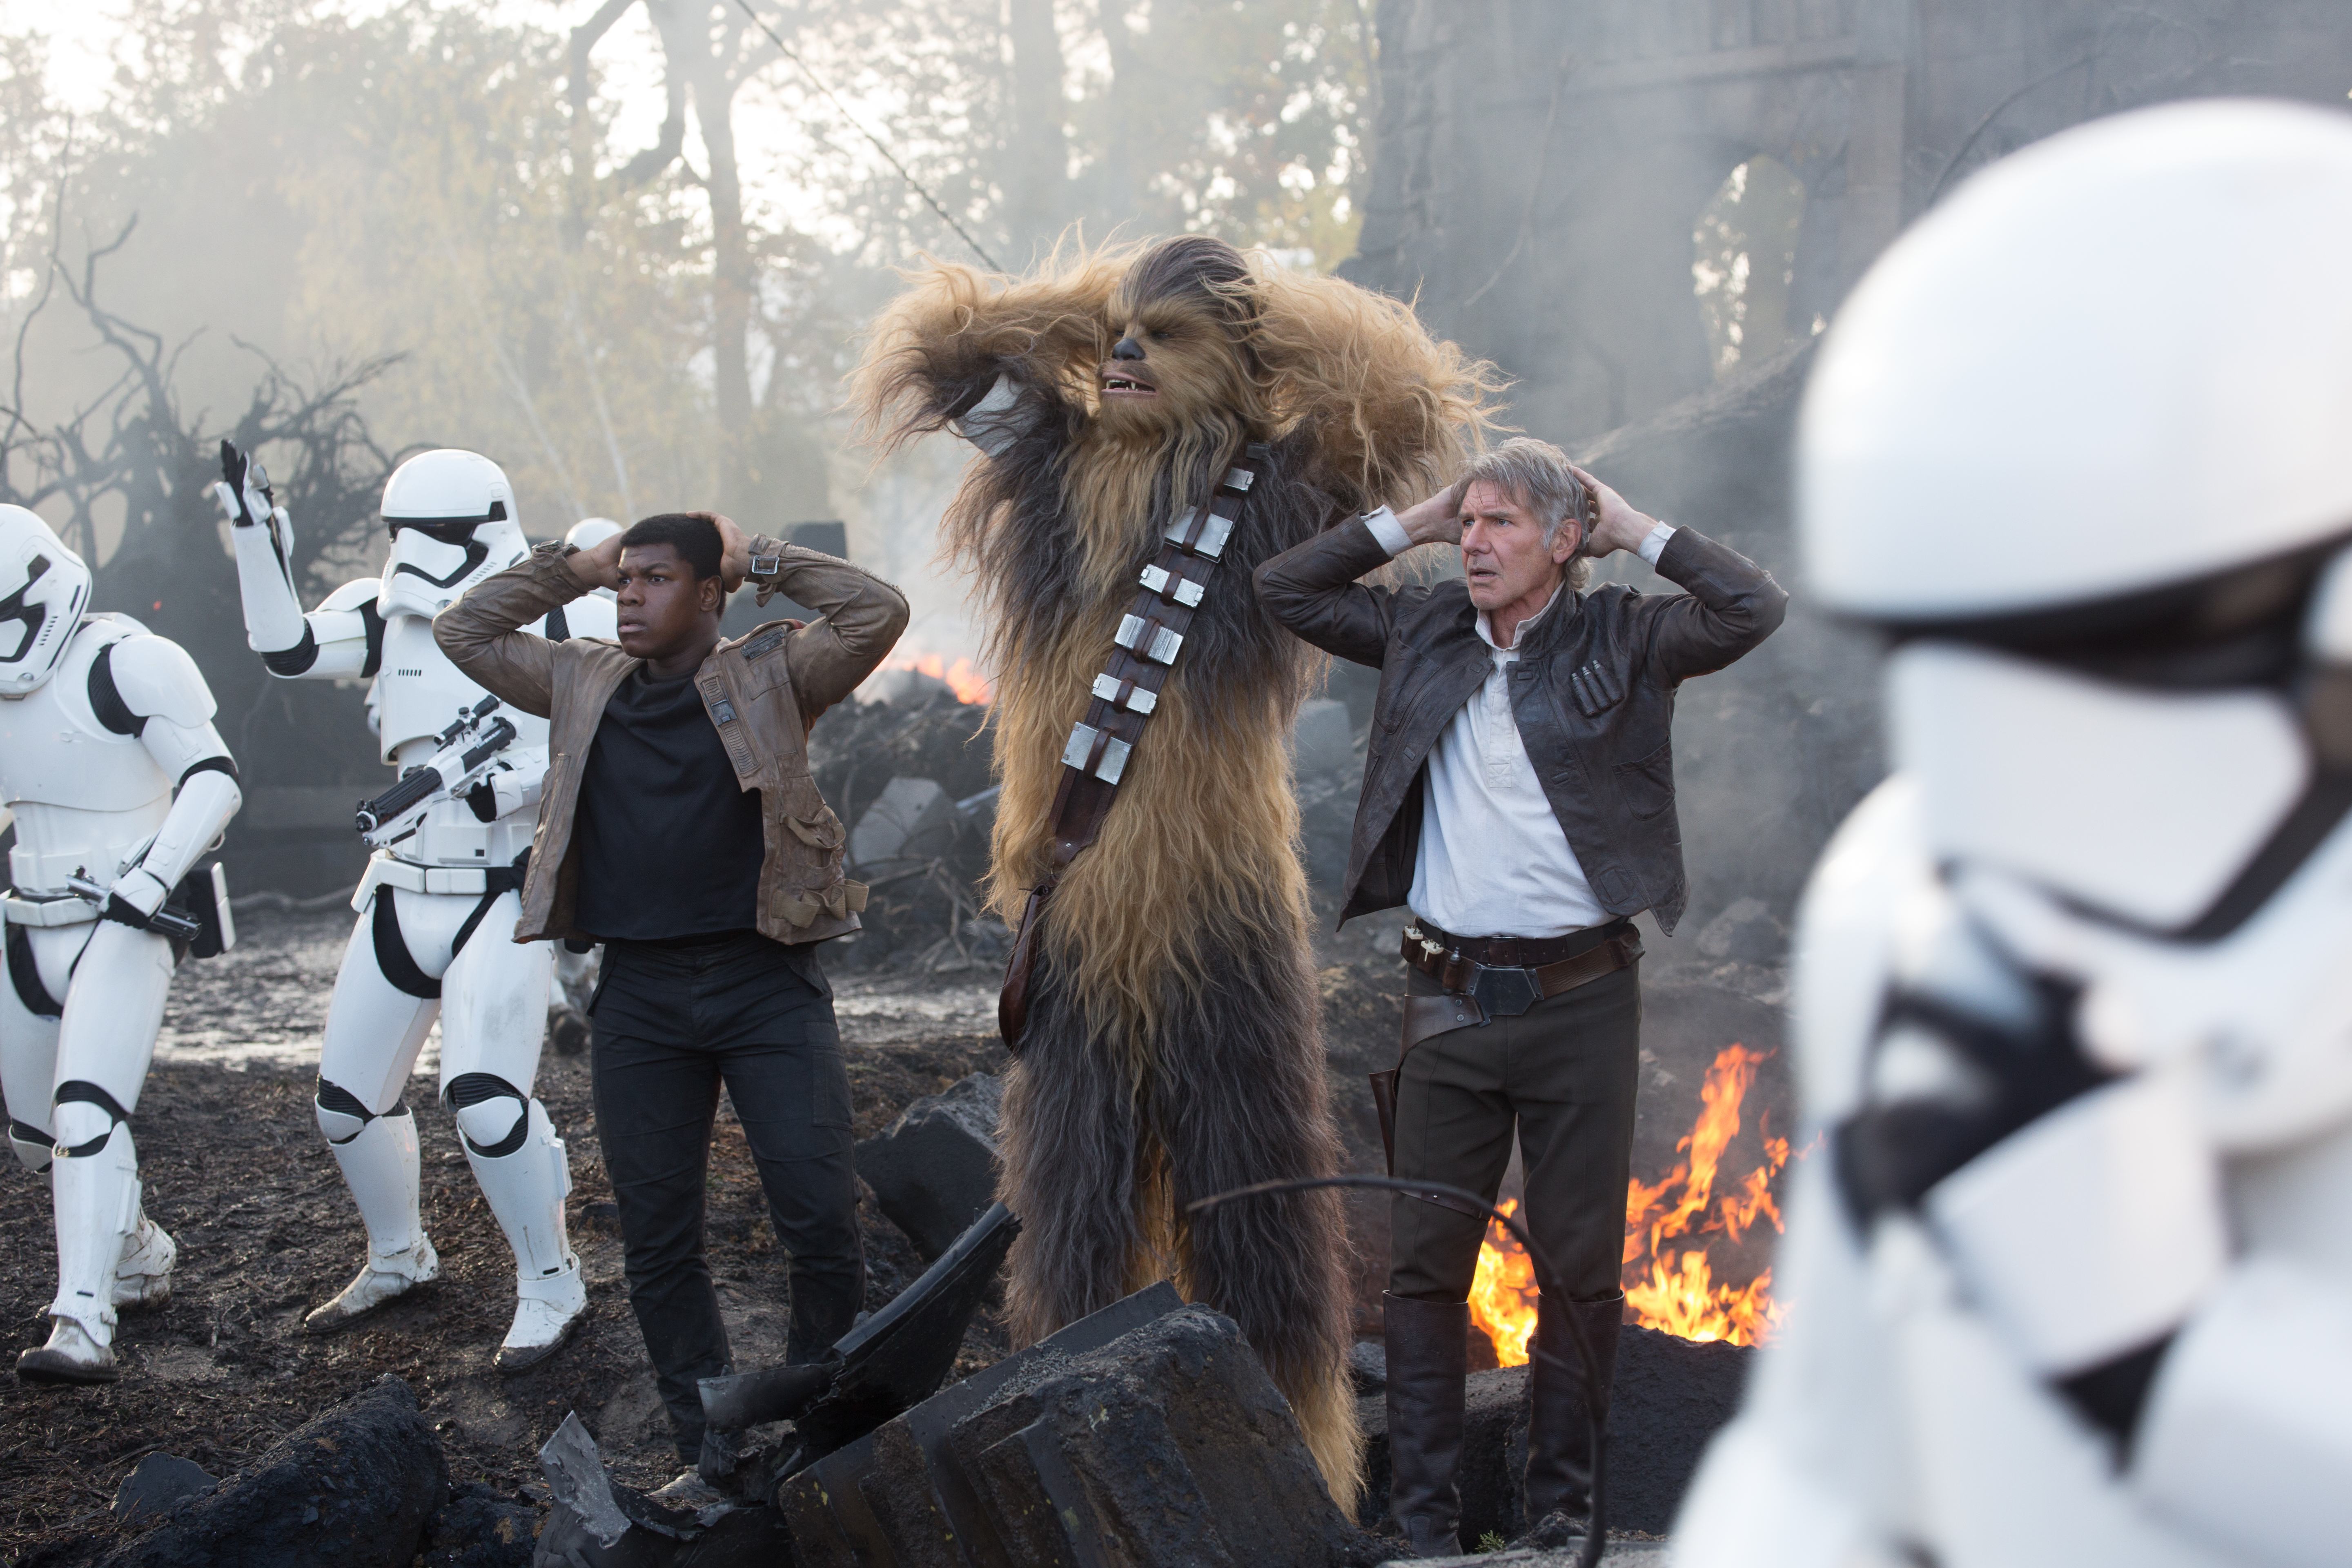 Movie Star Wars Episode VII: The Force Awakens 4k Ultra HD Wallpaper